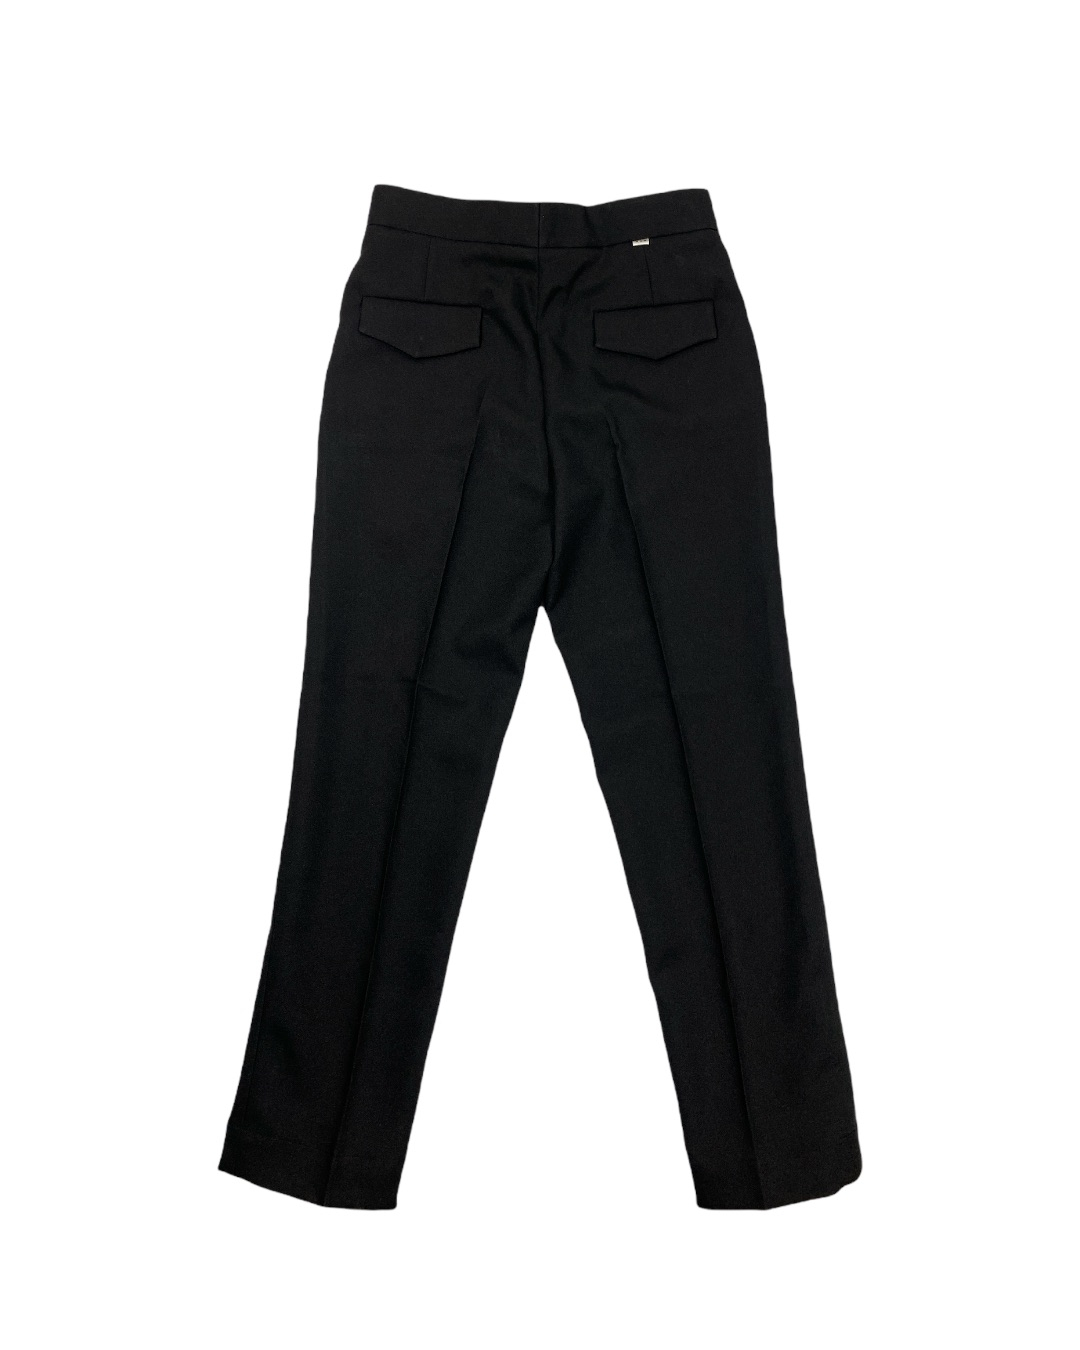 Ane Signature pants (Black)